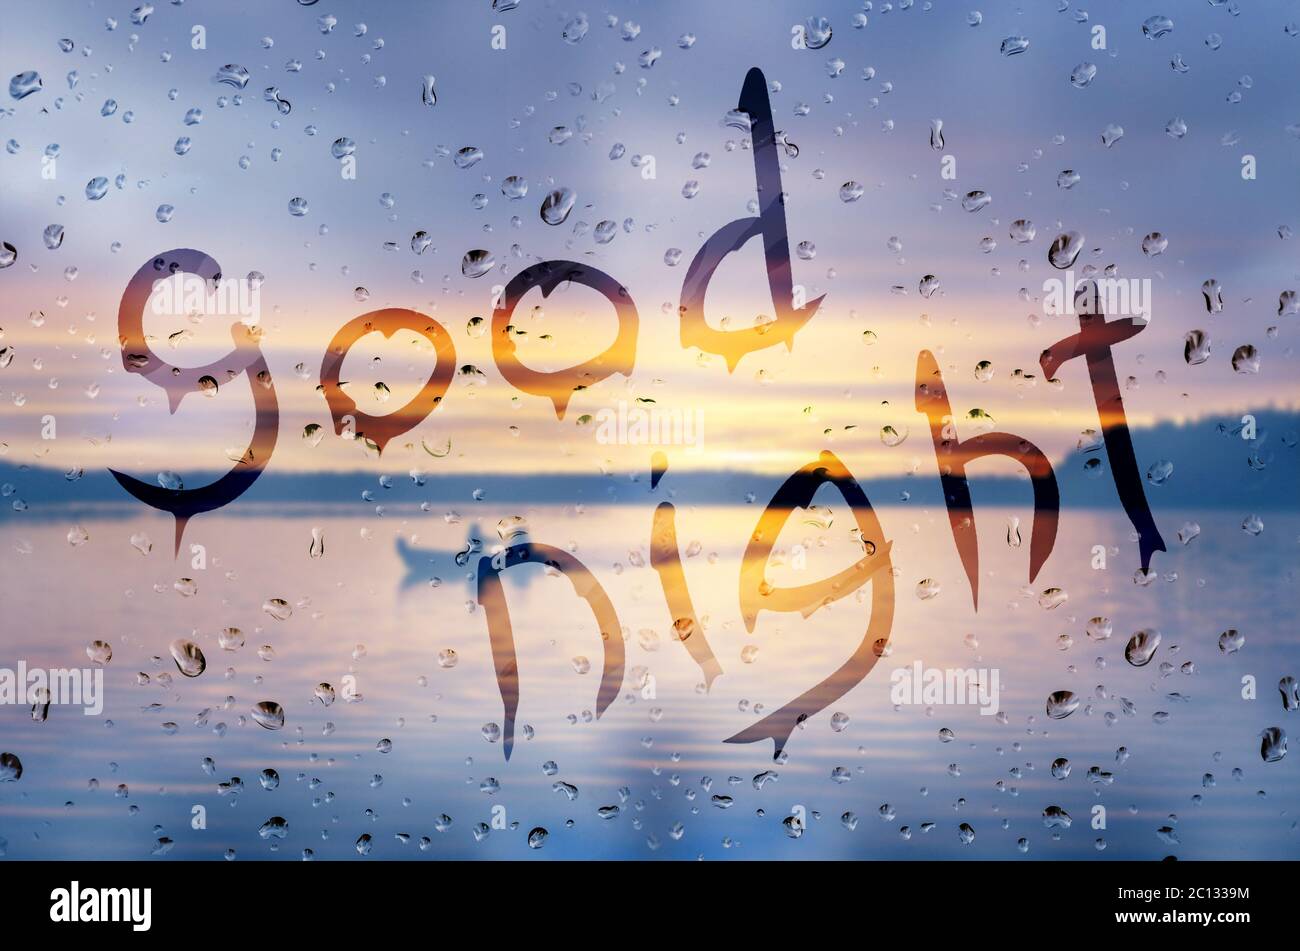 Rain on glass with Good night text Stock Photo - Alamy